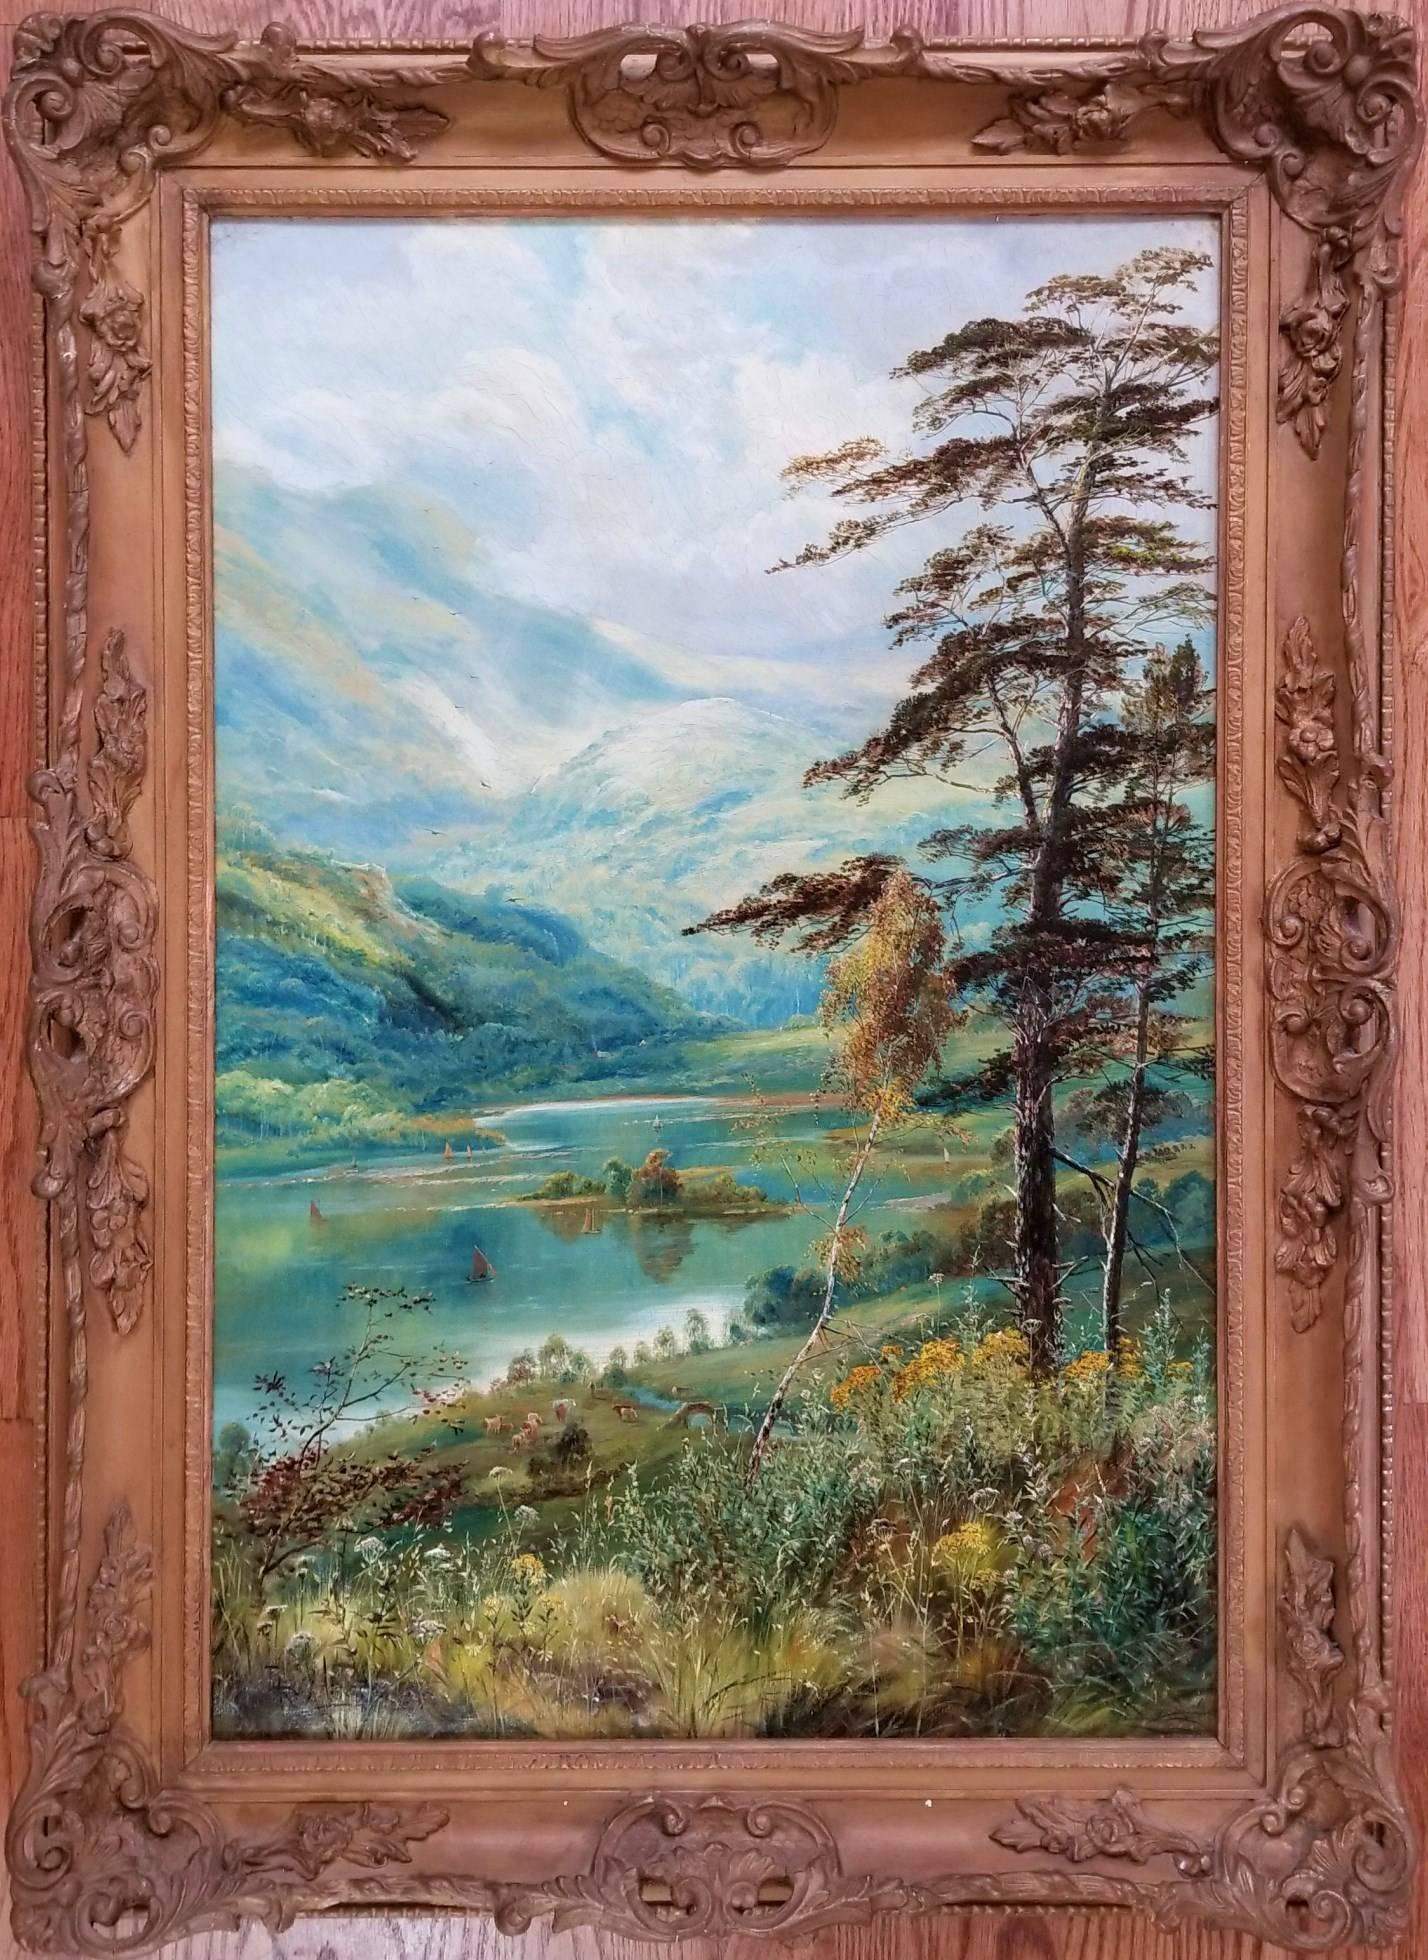 Loch Katrine, Scotland - Painting by Theodore Hines